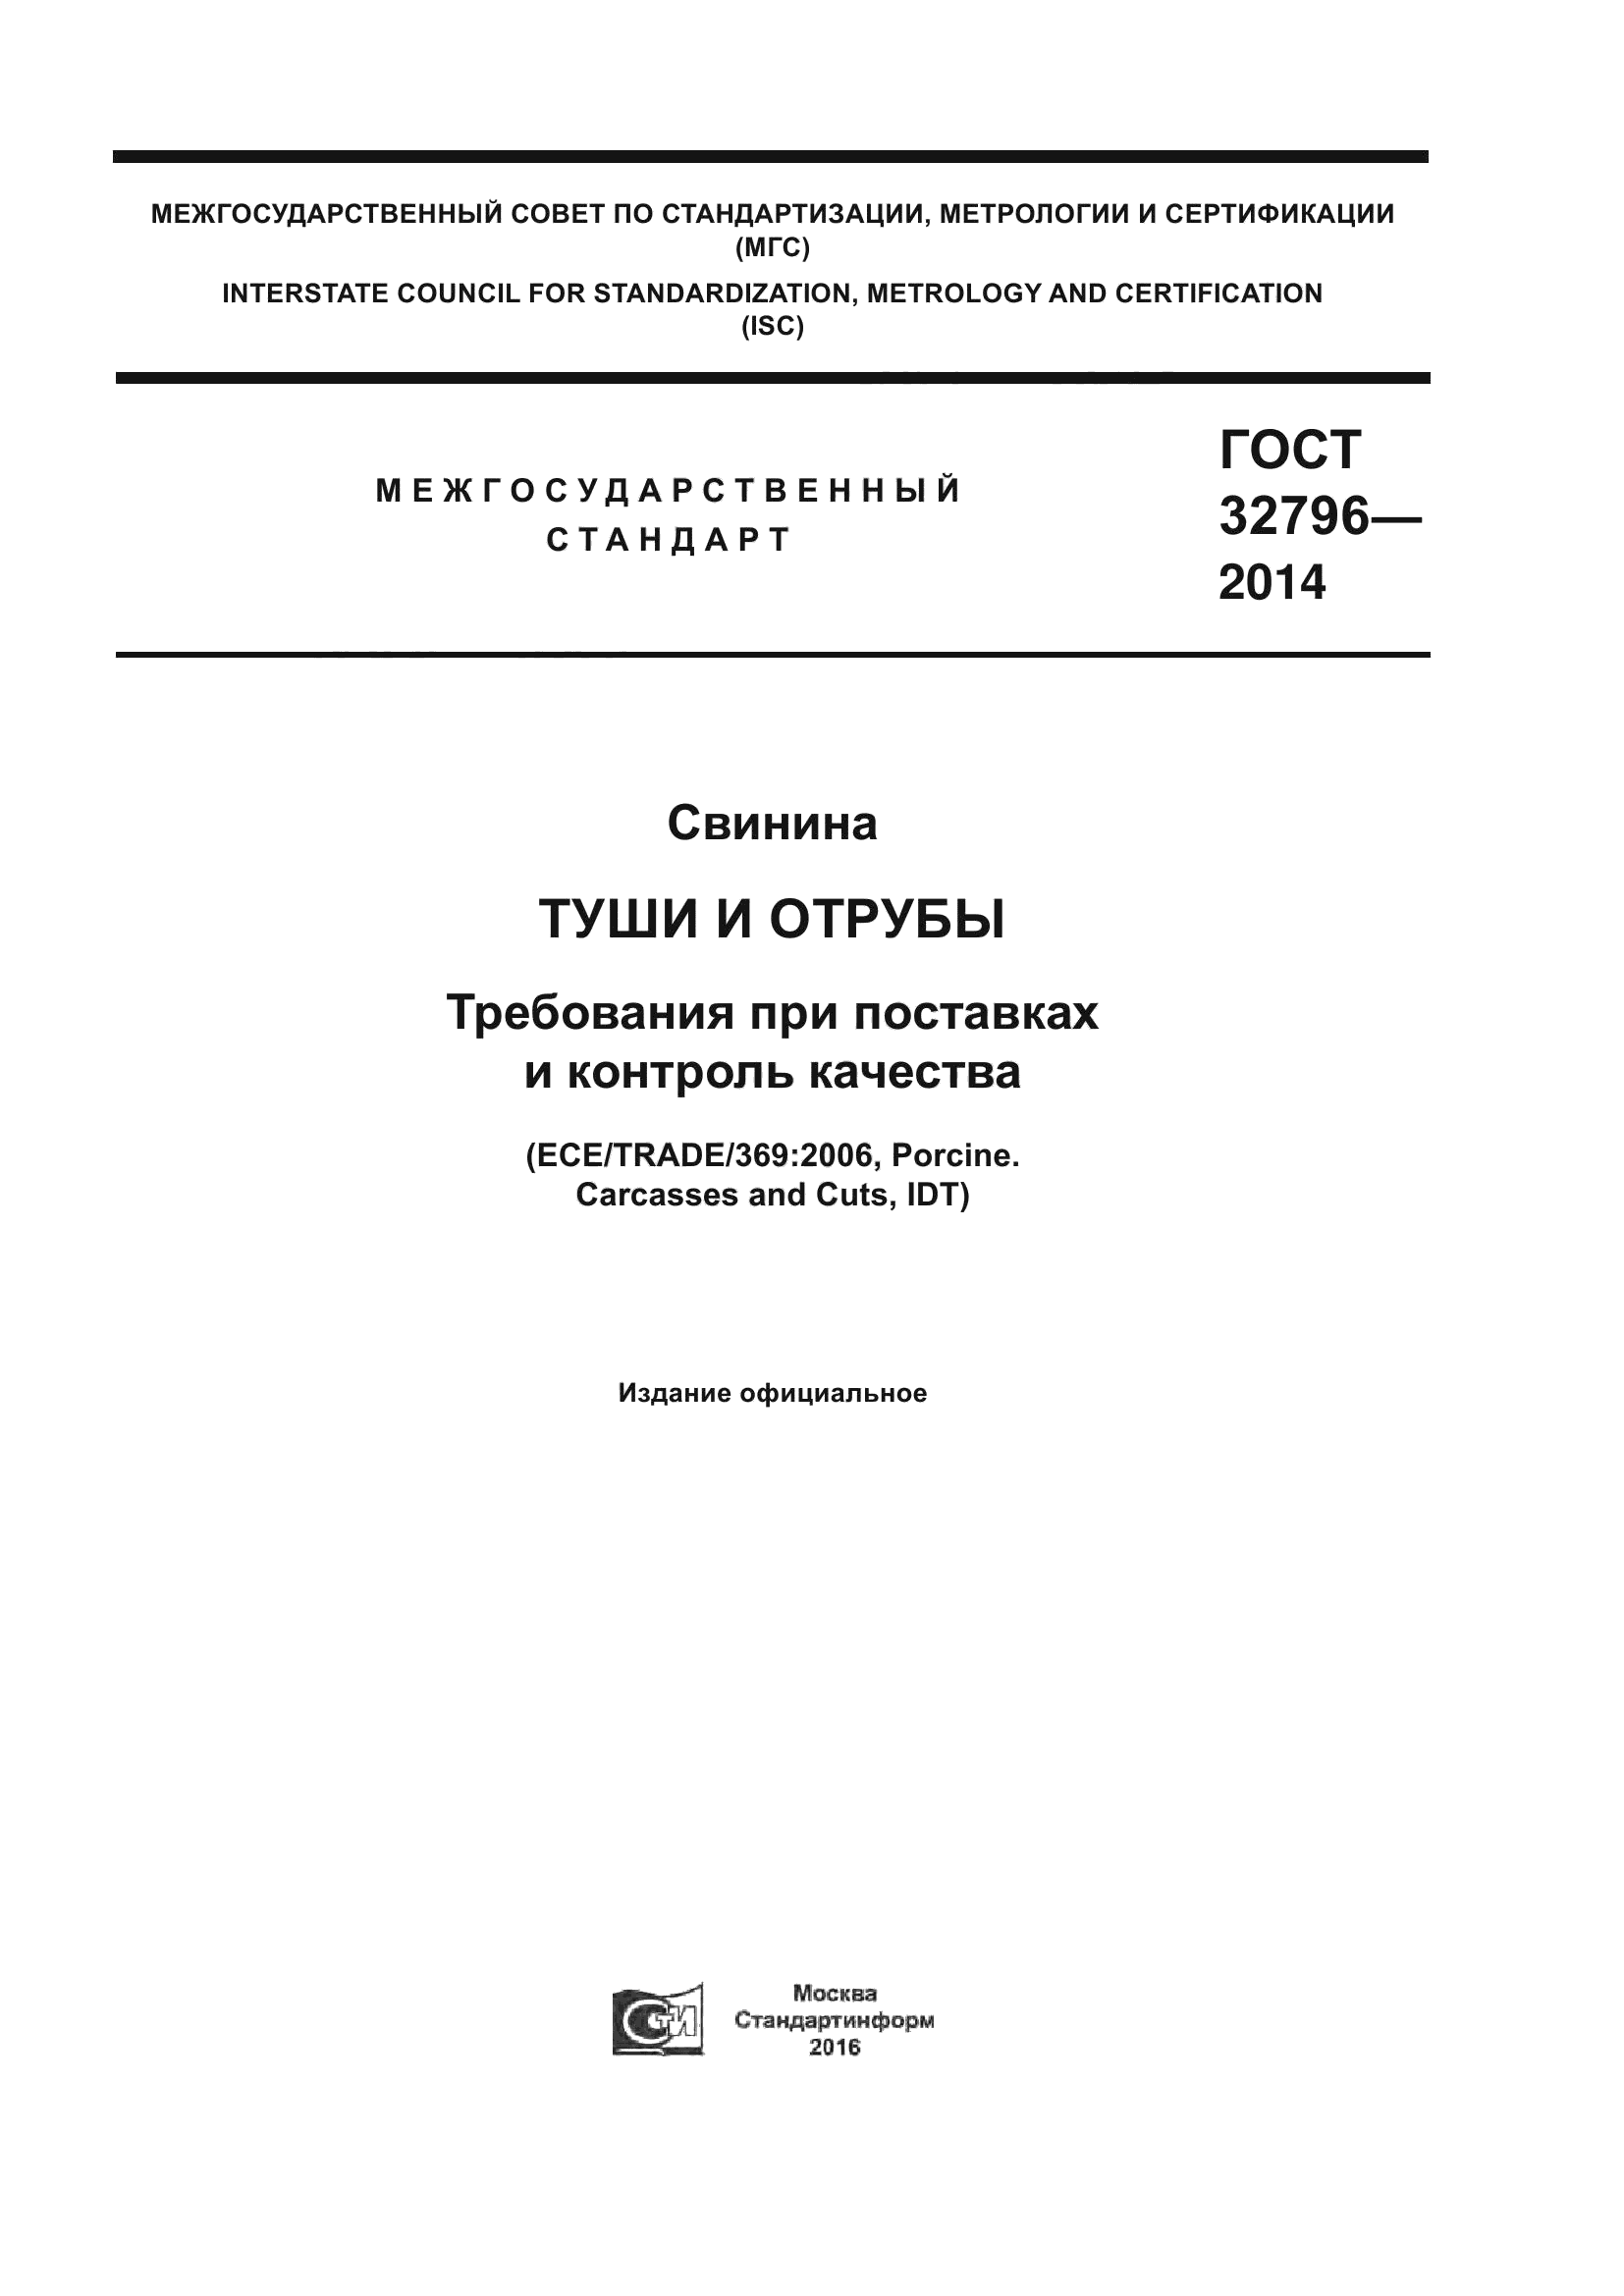 ГОСТ 32796-2014